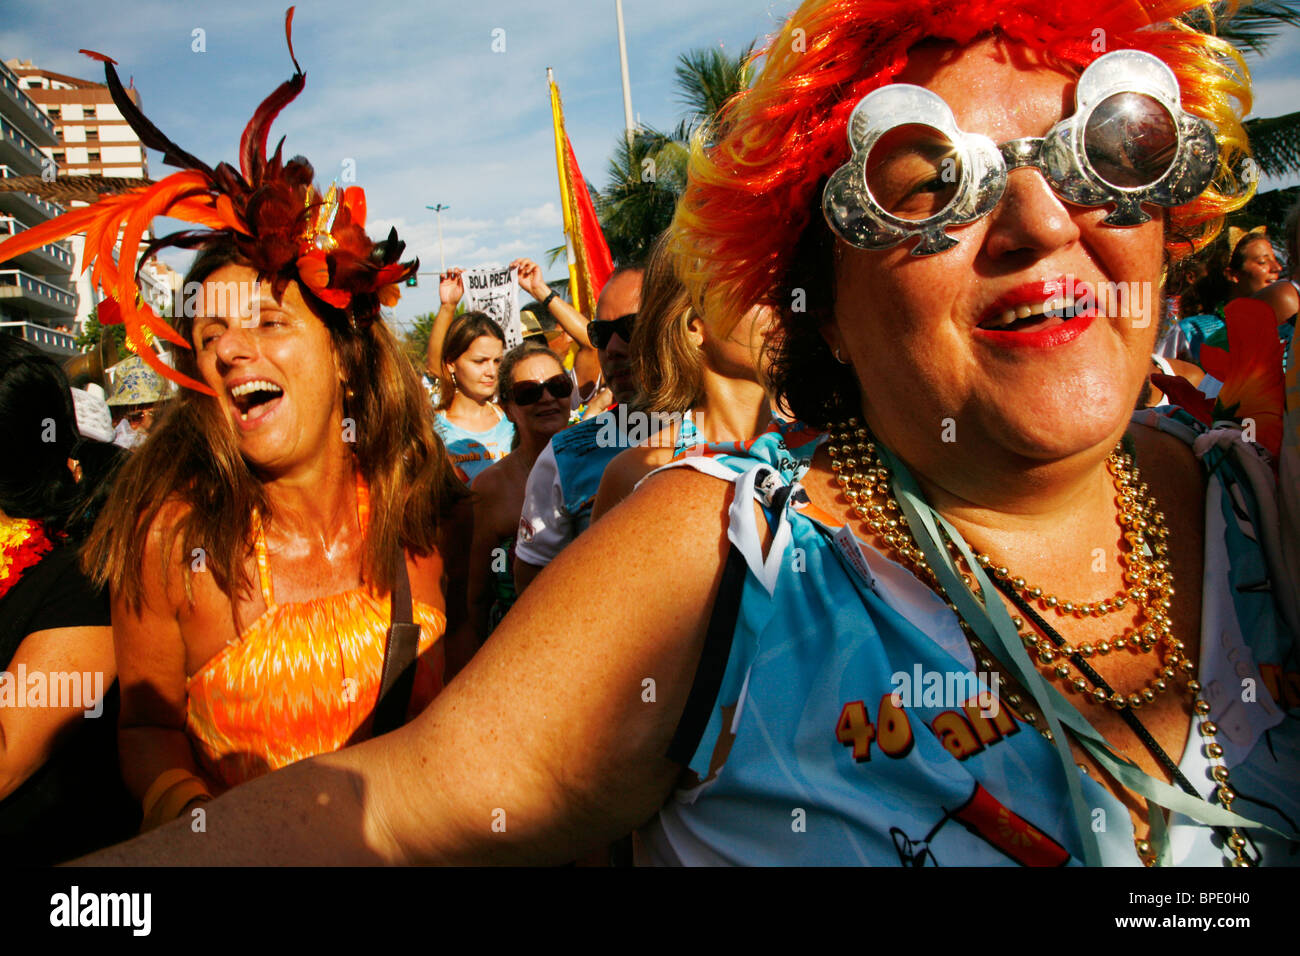 L'Ipanema banda de Banda sfilata di Carnevale, Rio de Janeiro, Brasile. Foto Stock